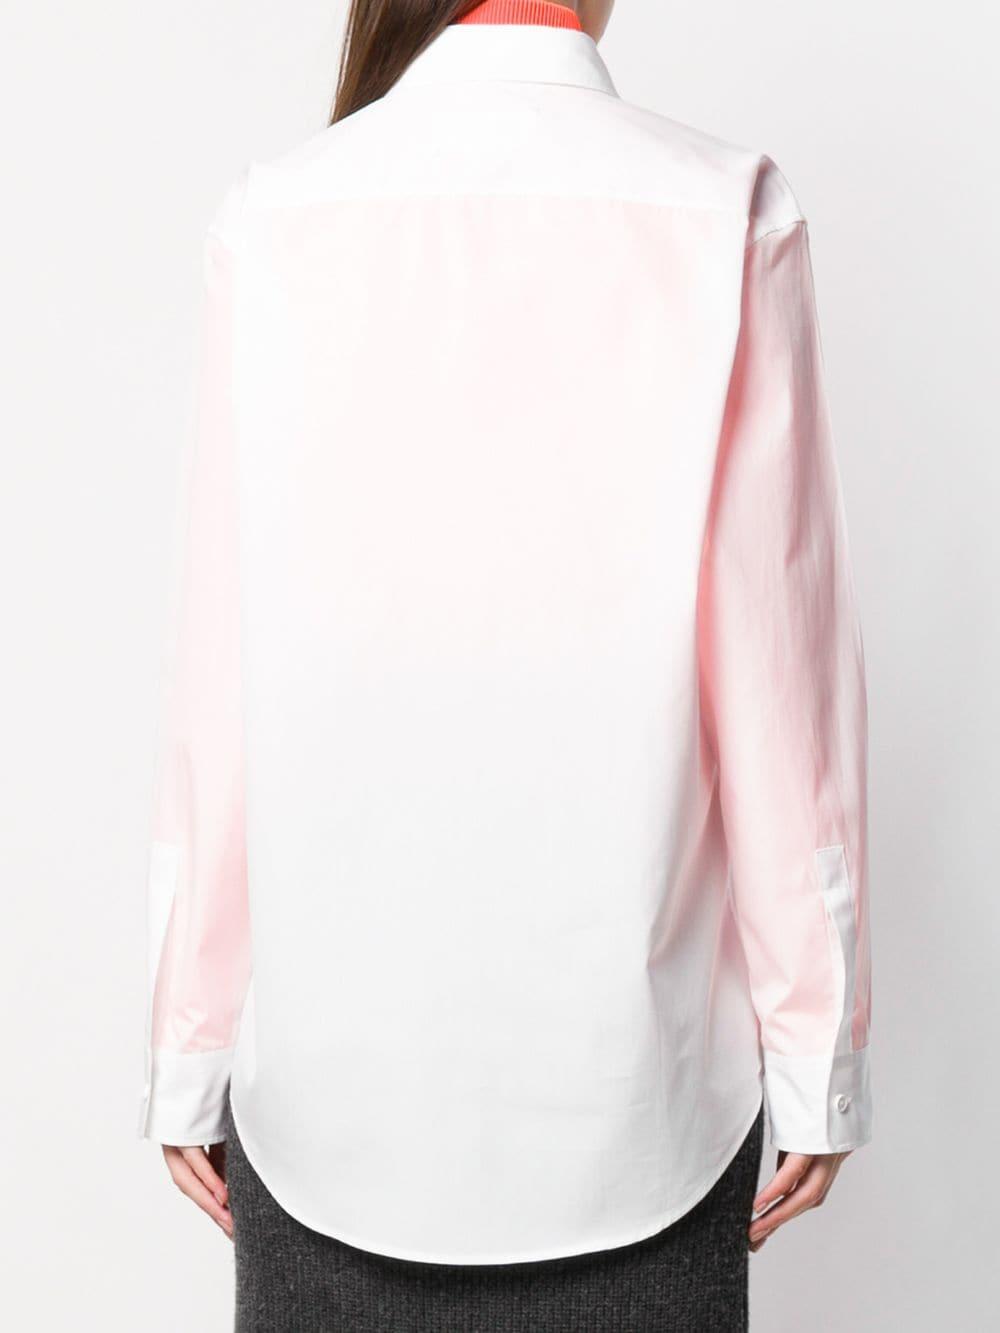 Lyst - Maison Margiela Contrast Zip Shirt in White